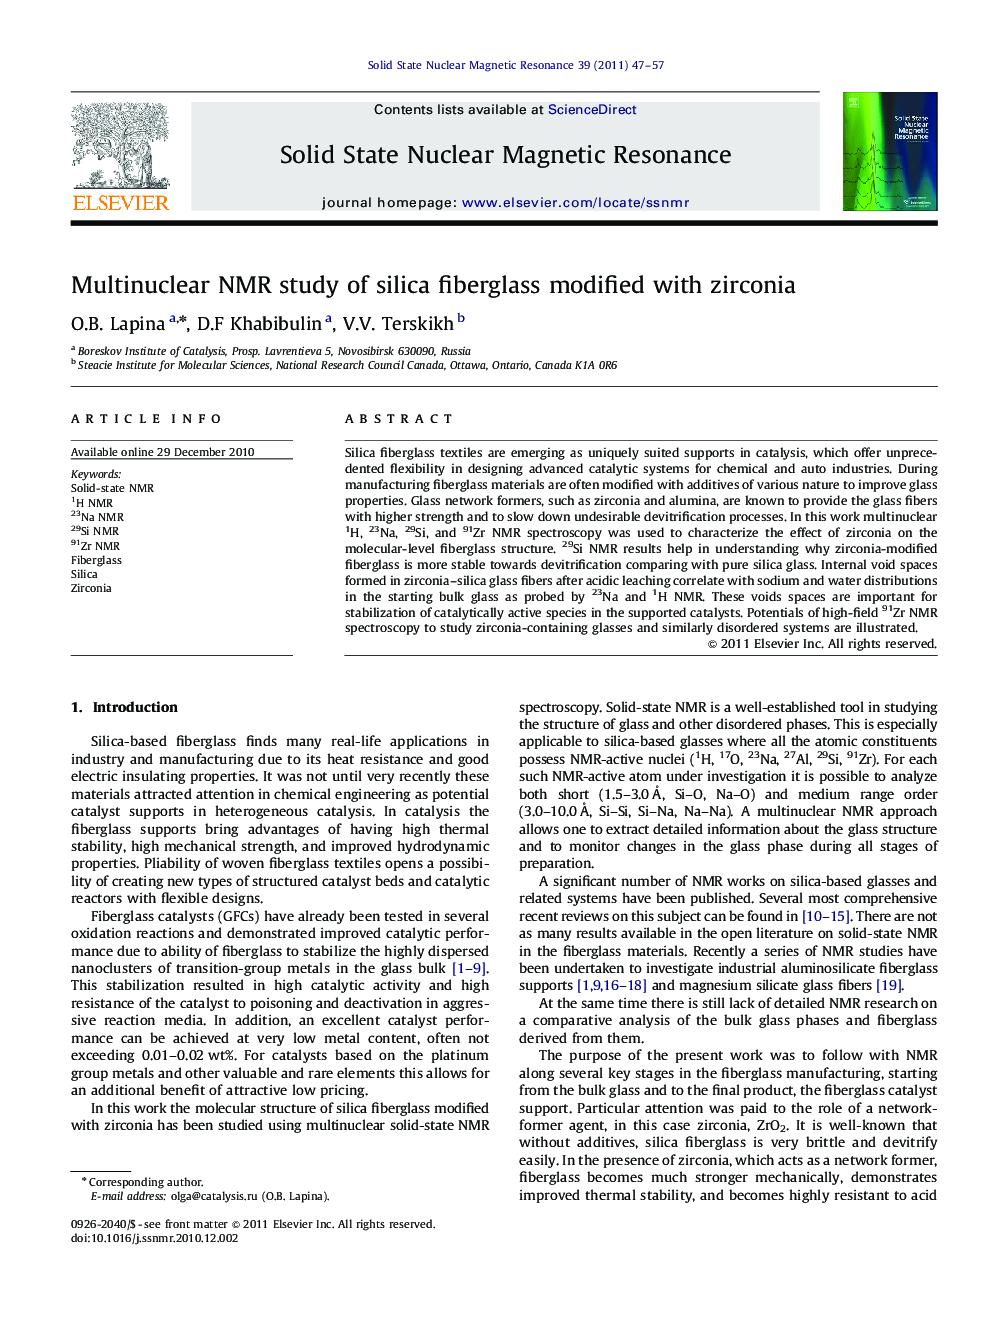 Multinuclear NMR study of silica fiberglass modified with zirconia